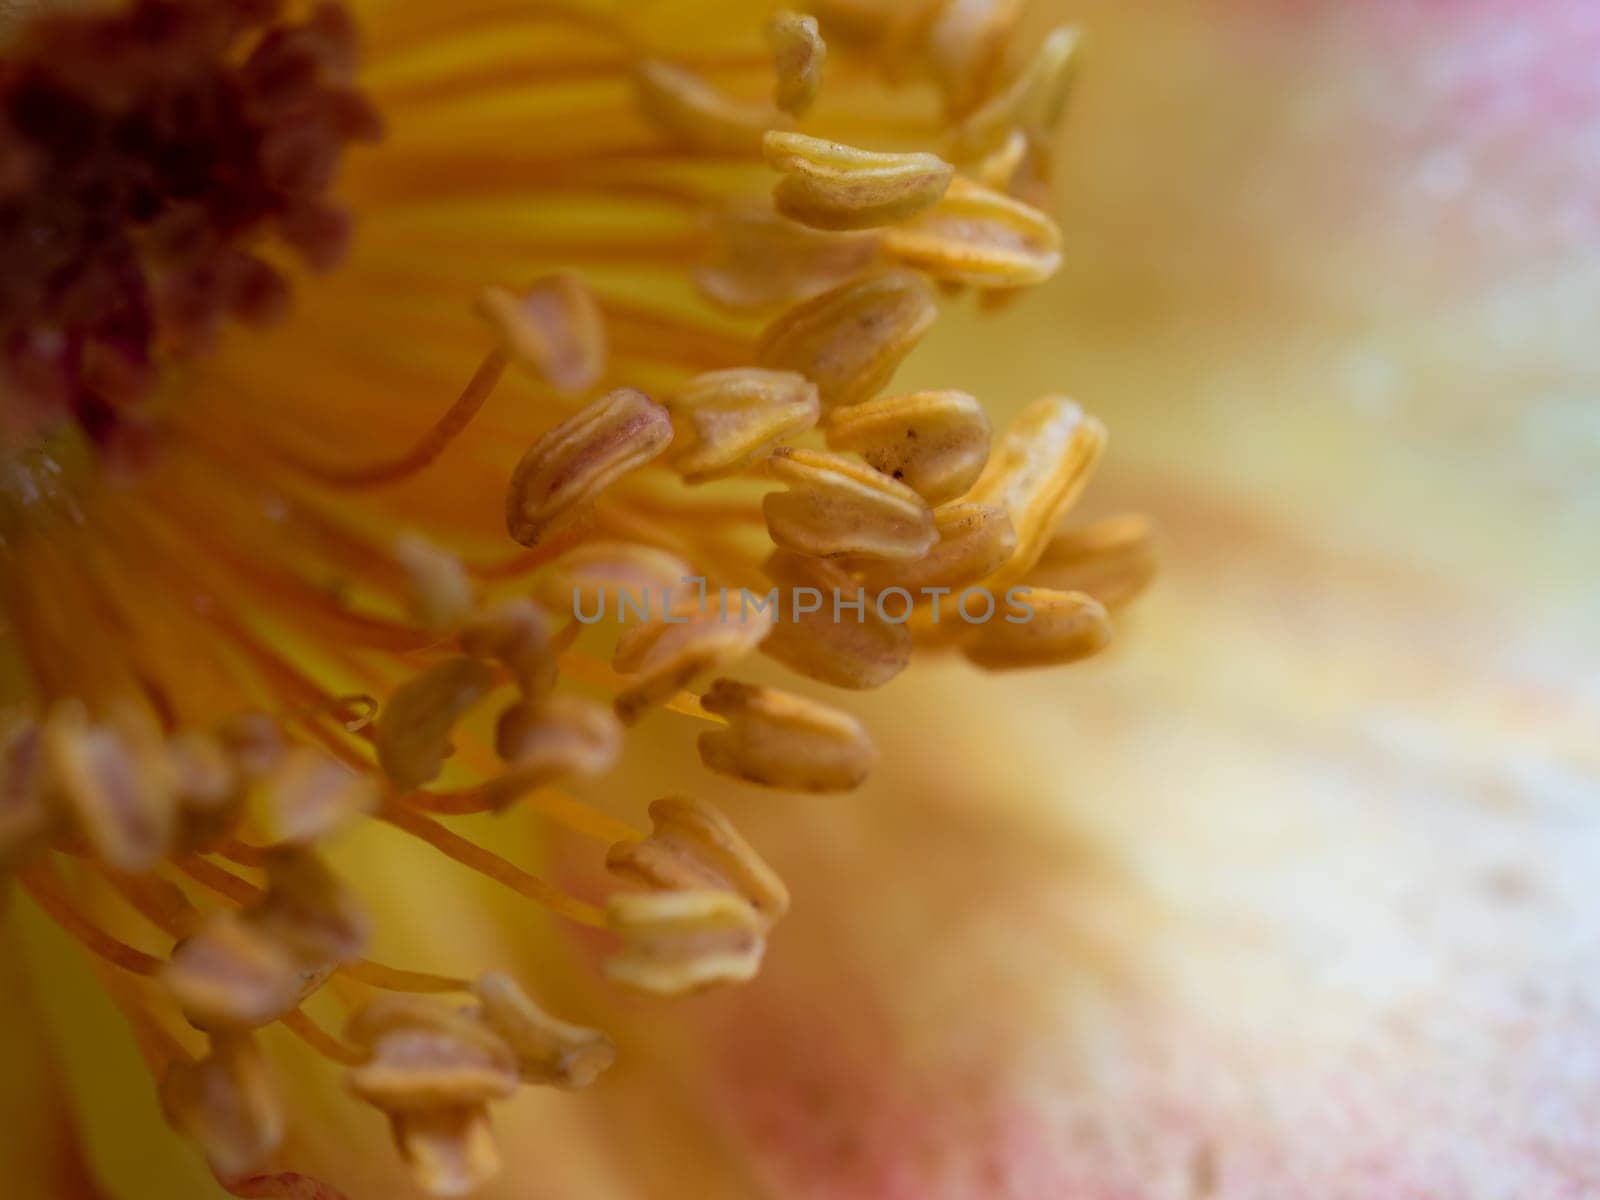 Close-up delicate La Parisienne rose pollens and petals as nature background